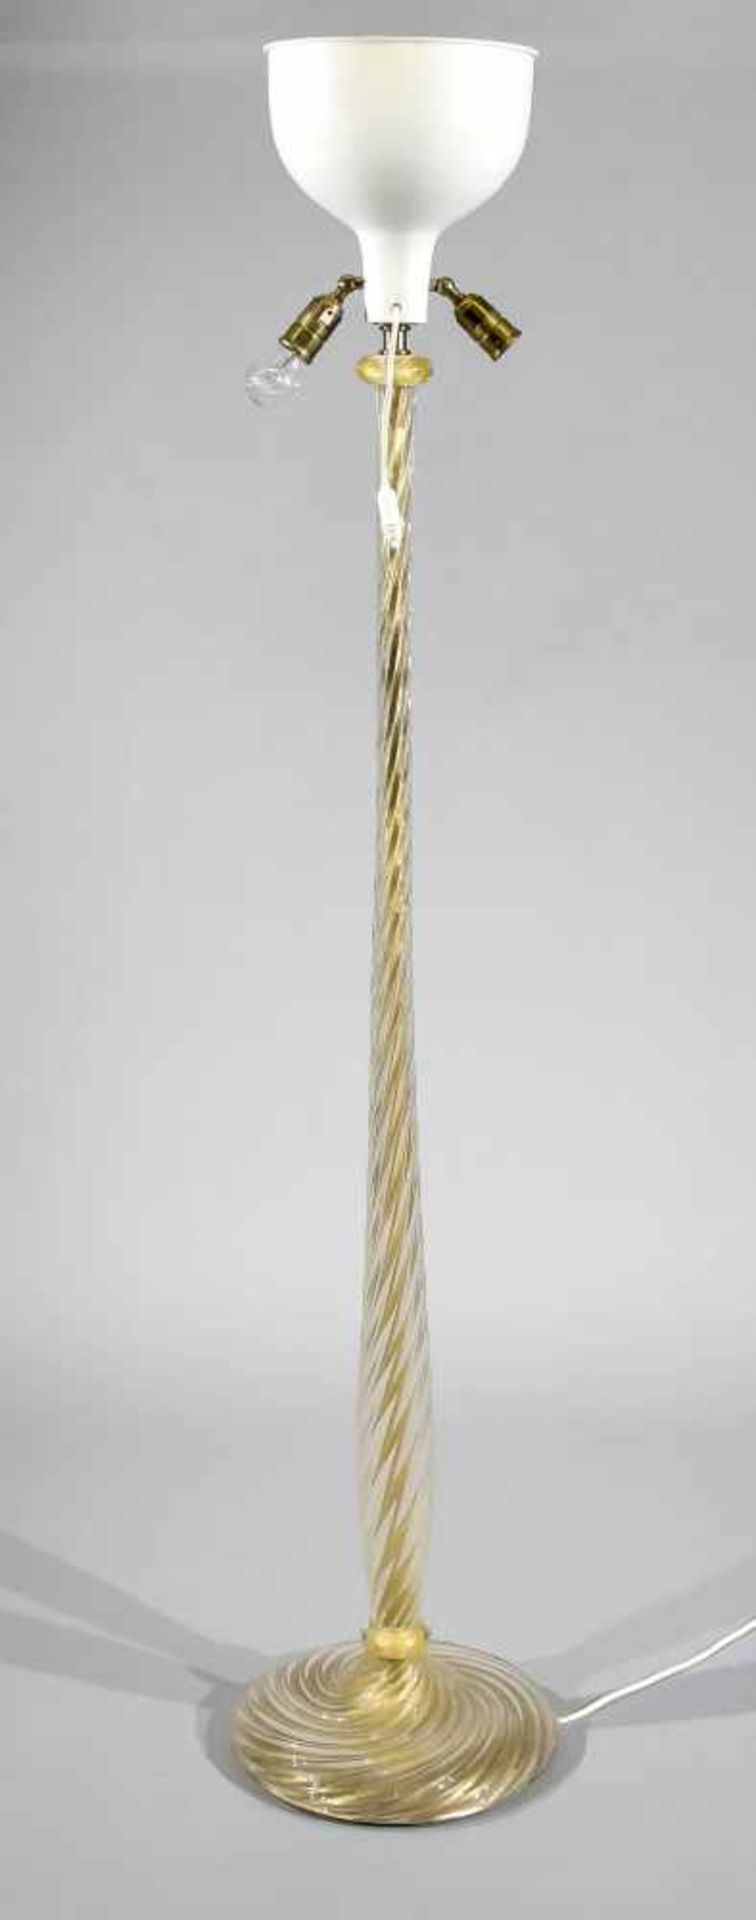 Murano Standlampe, um 1970, elektr., 3-flg., Messingschaft spiralförmig mit klarem Glasüberfangen,